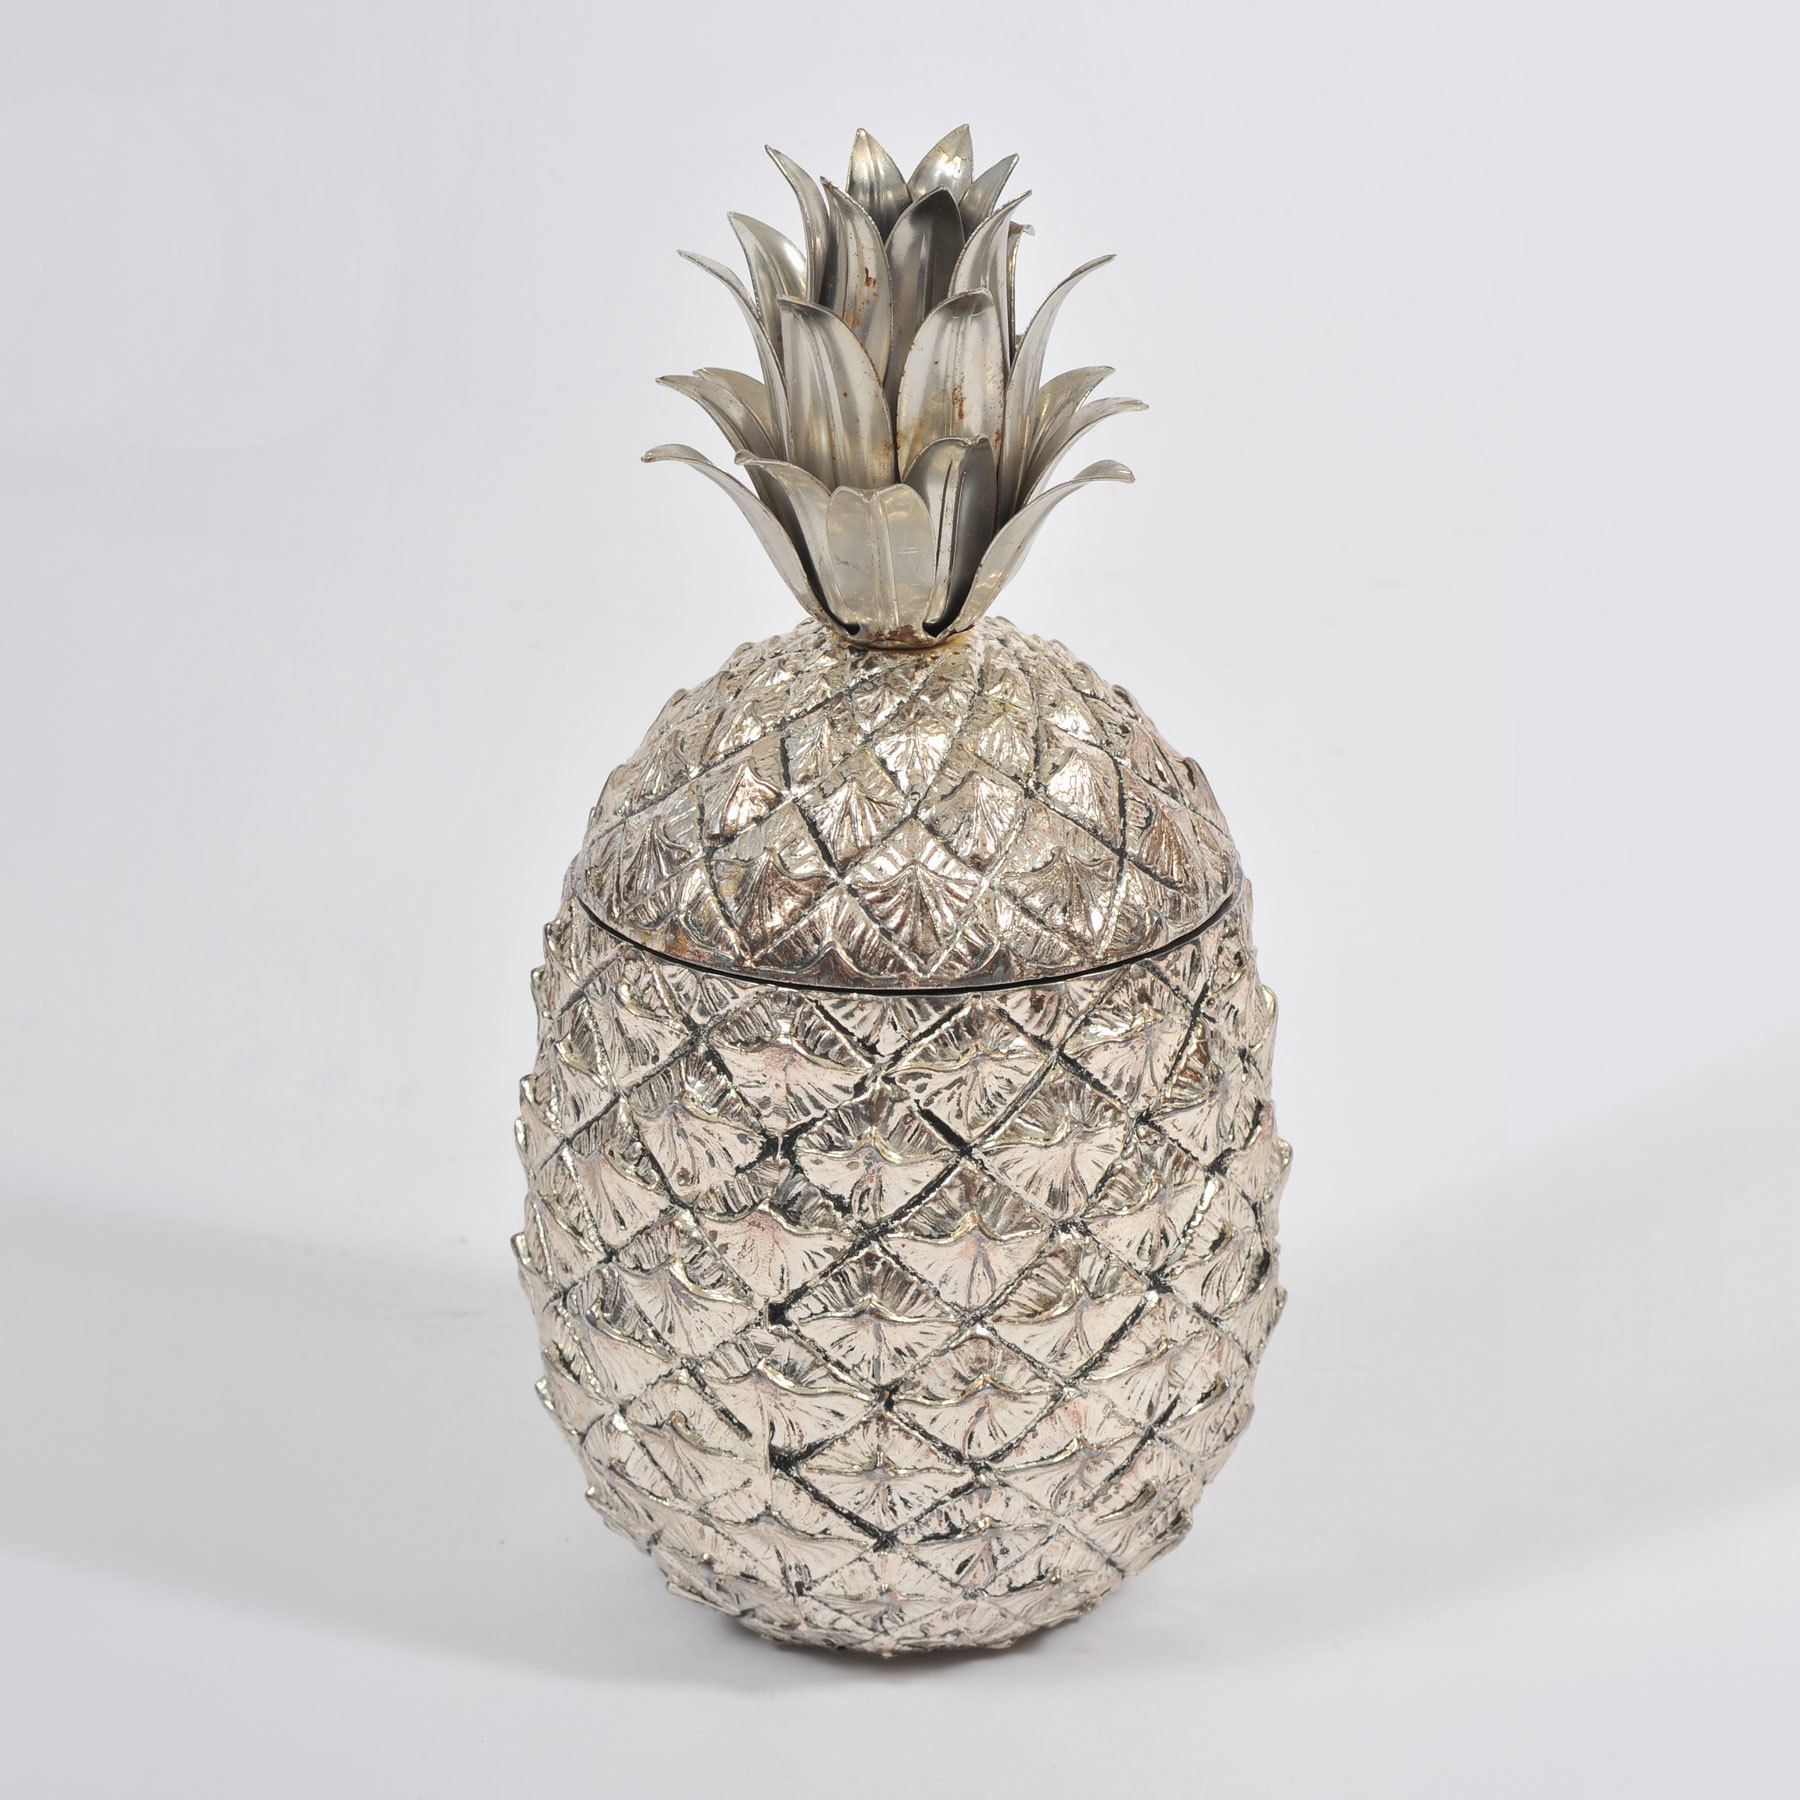 The image for Pineapple Ice Bucket B 01 Vw